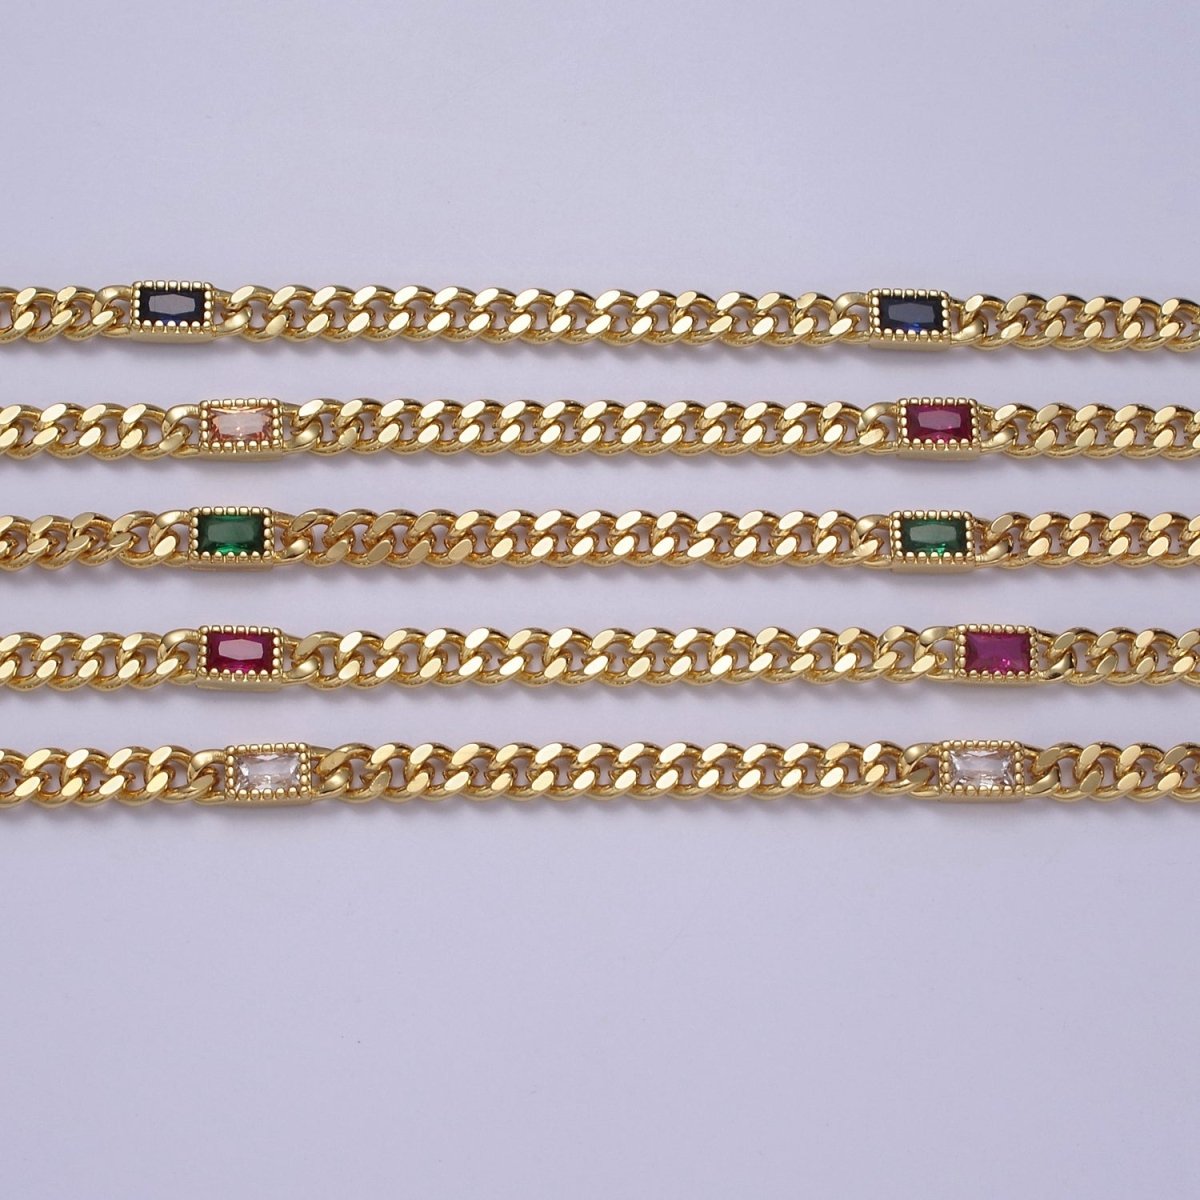 Chunky curb chain with Clear CZ Stone for Necklace Bracelet Statement Jewelry | WA-1373 - WA-1377 WA-1405 Clearance Pricing - DLUXCA